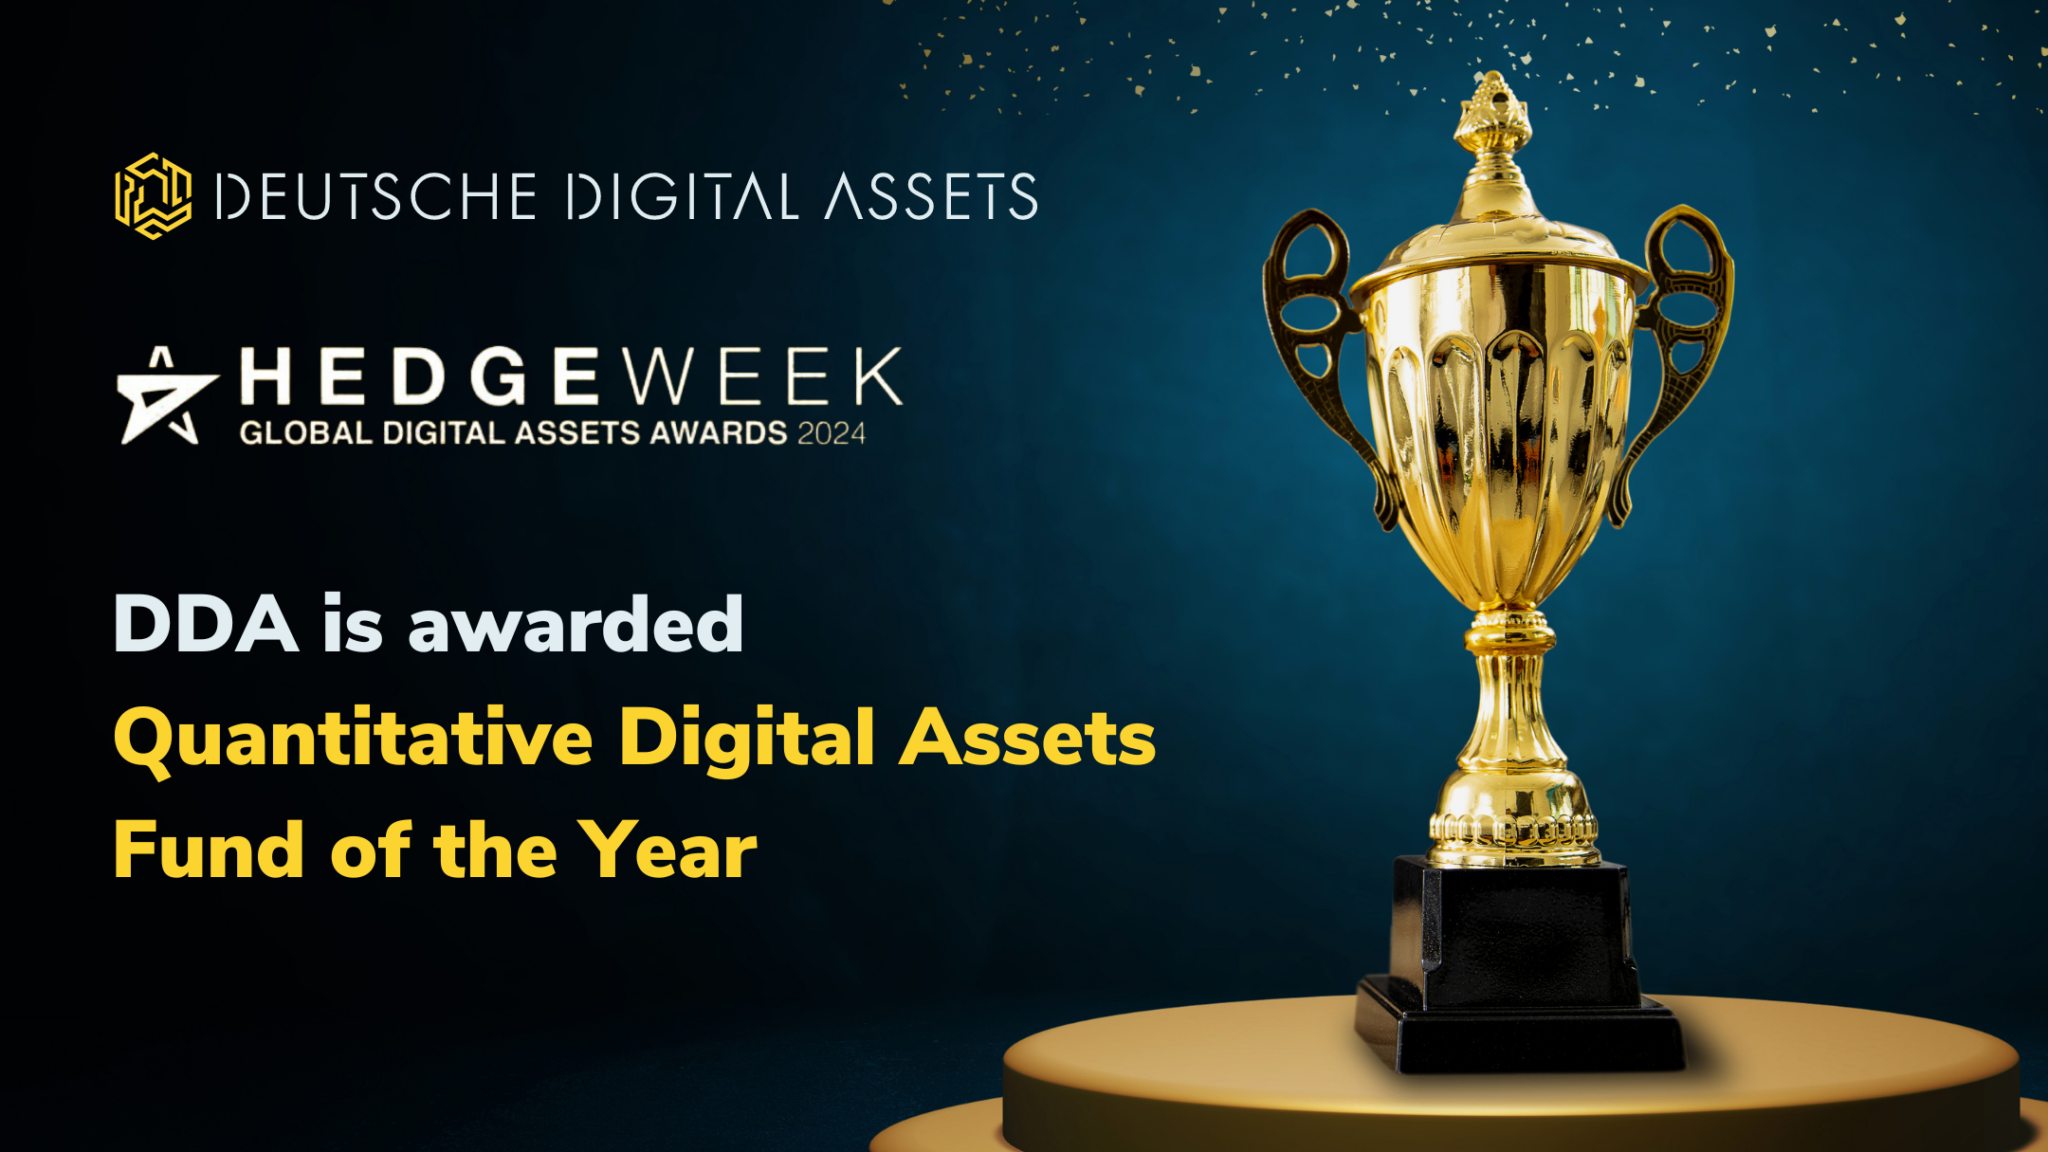 Hedgeweek - global digital assets awards, dda is awarded quantitative digital assets fund of the year award